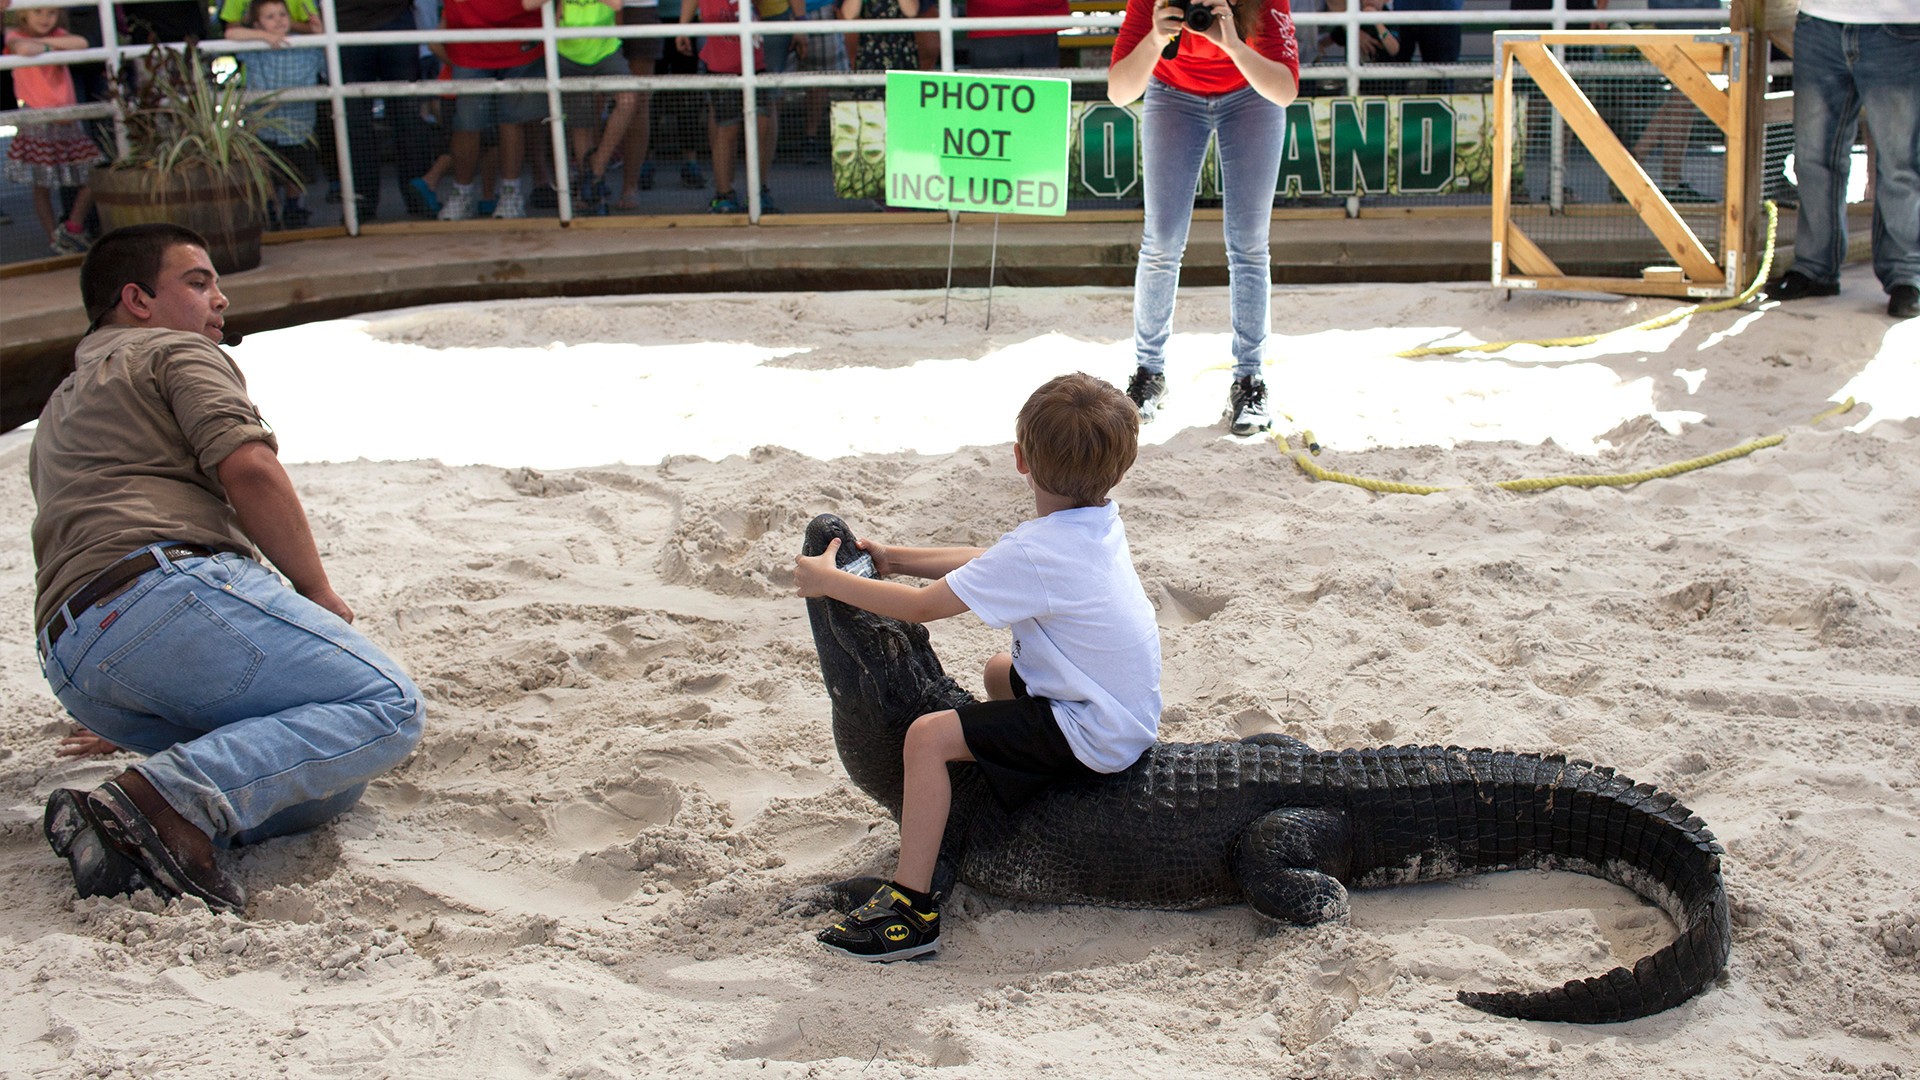 Gator Wrestling Is Preserving Florida's Independent Tourism Industry